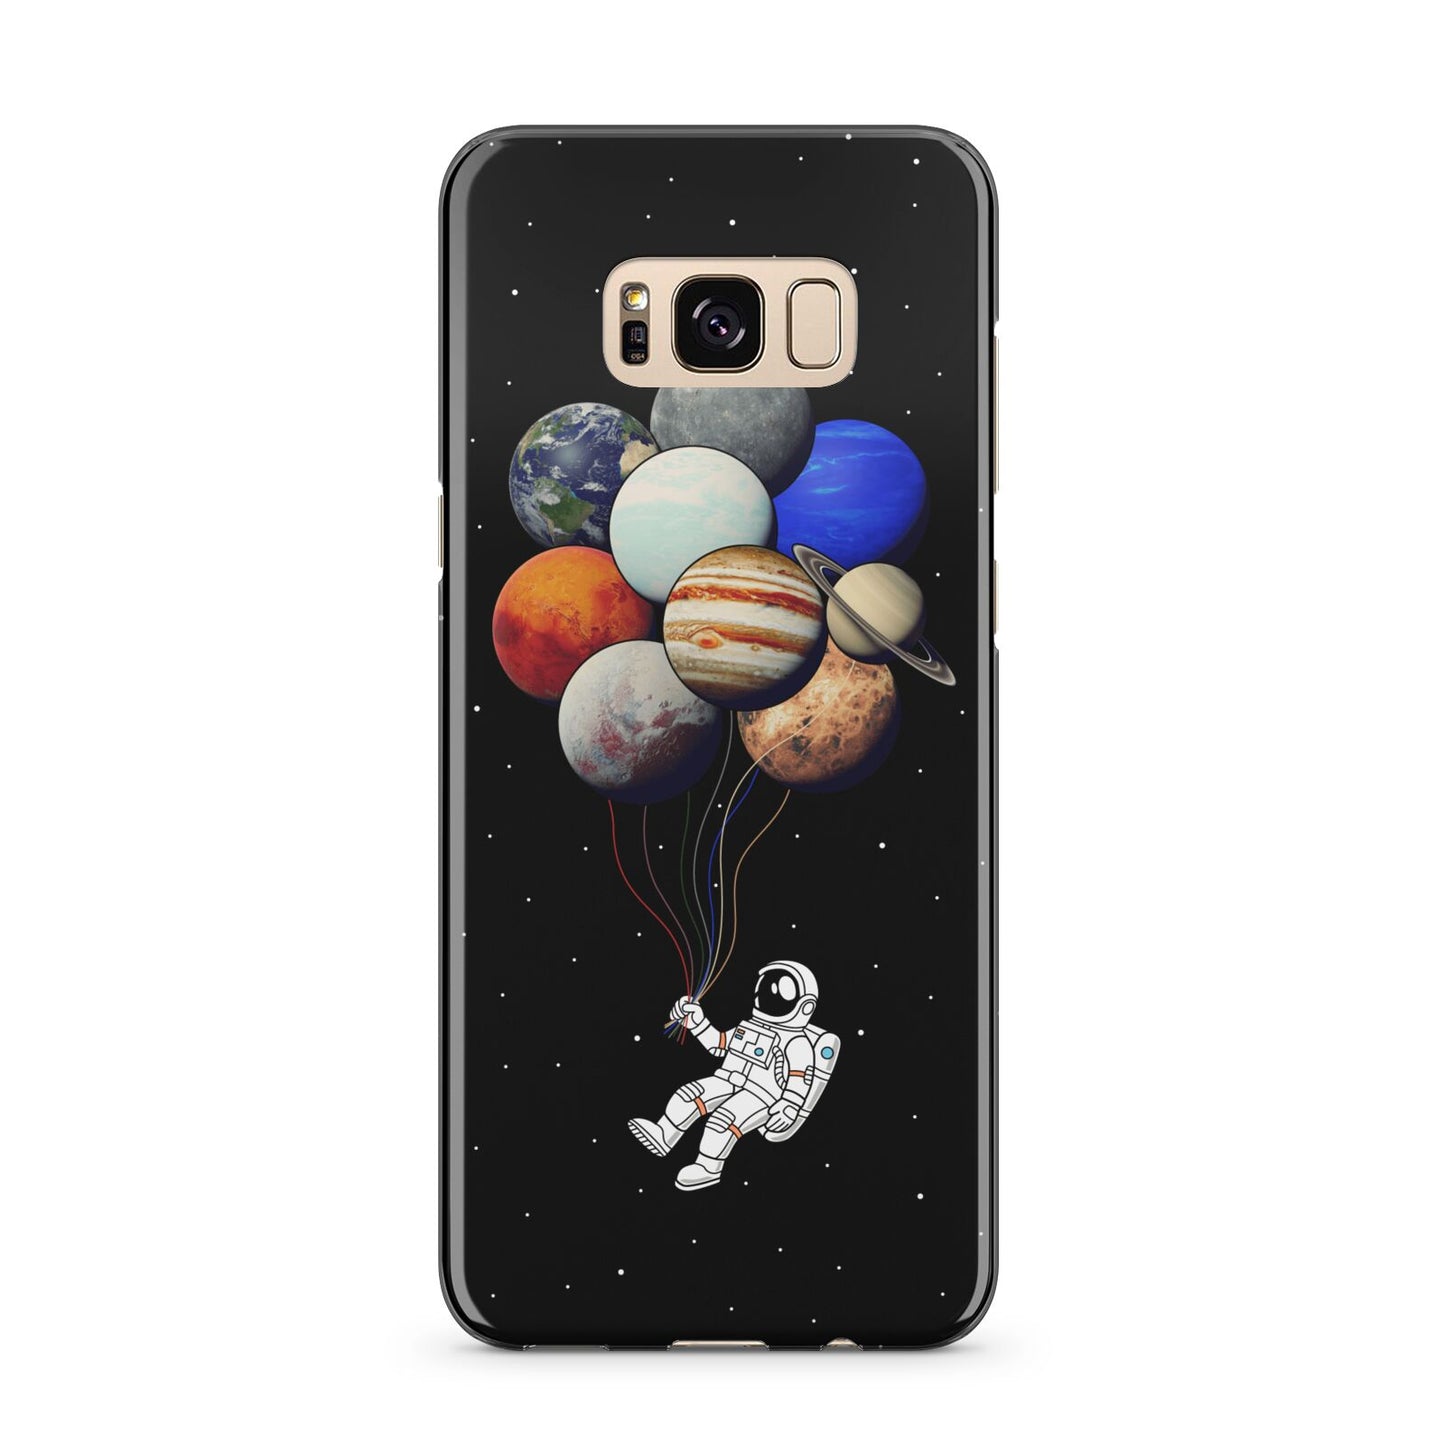 Astronaut Planet Balloons Samsung Galaxy S8 Plus Case